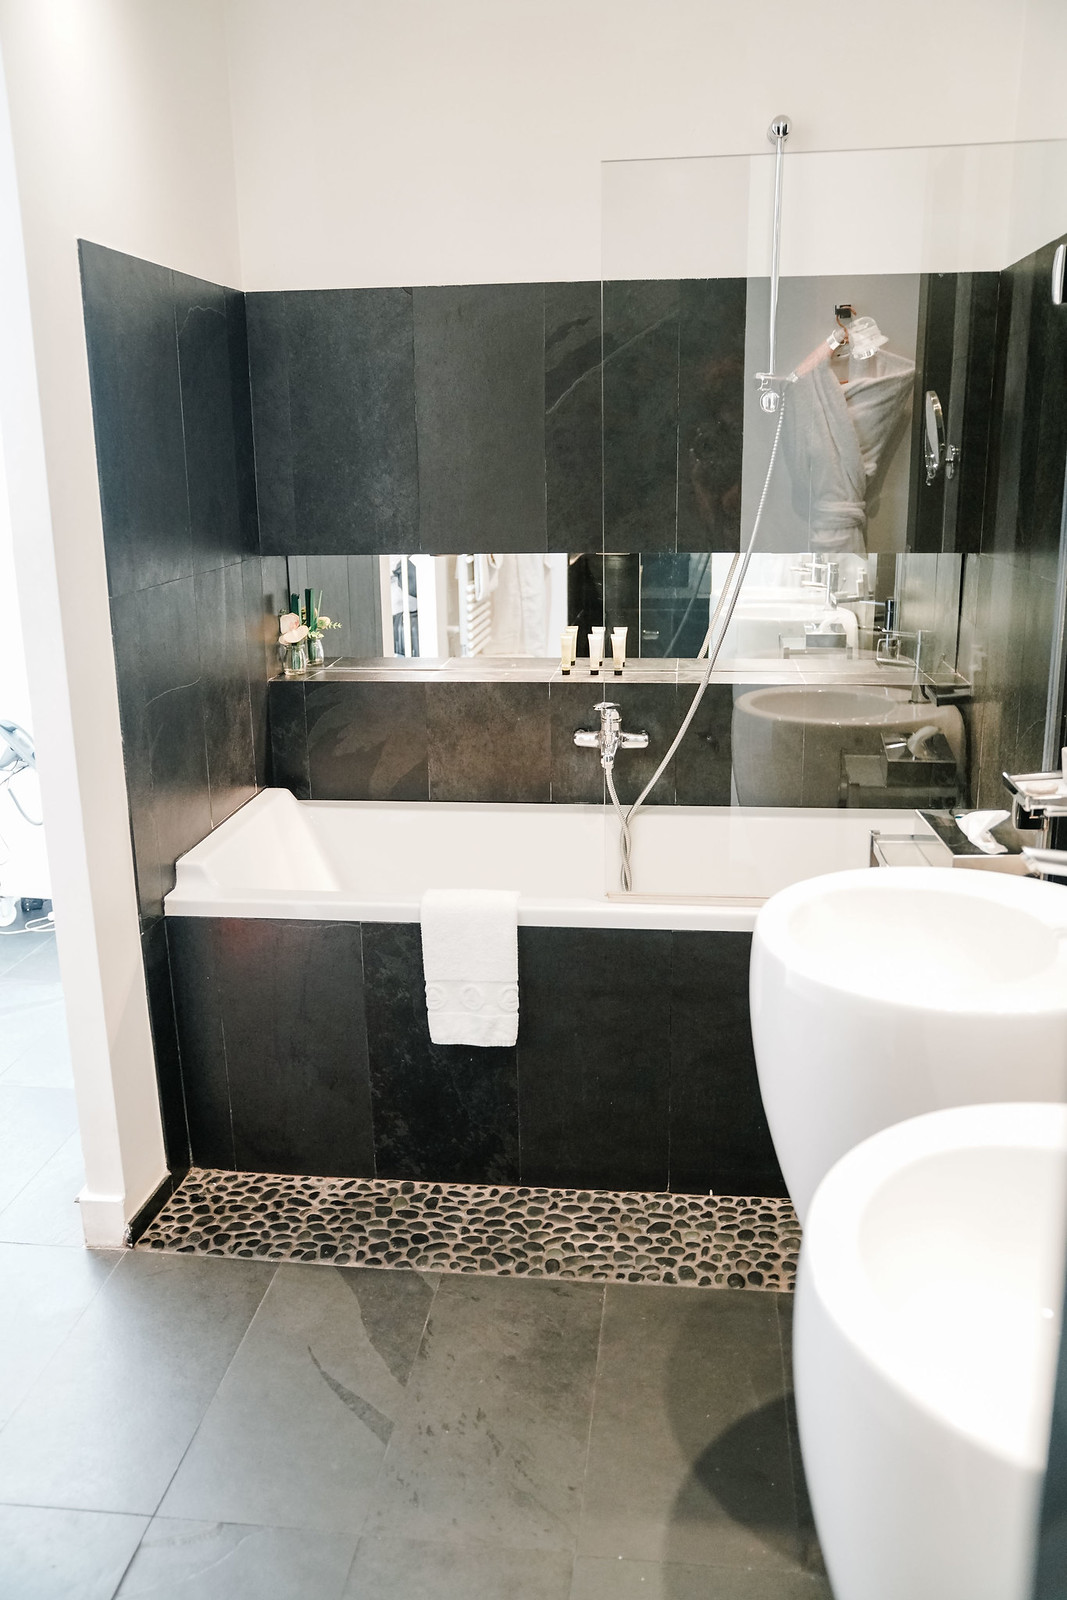 1k Paris hotel l deluxe bathroom review